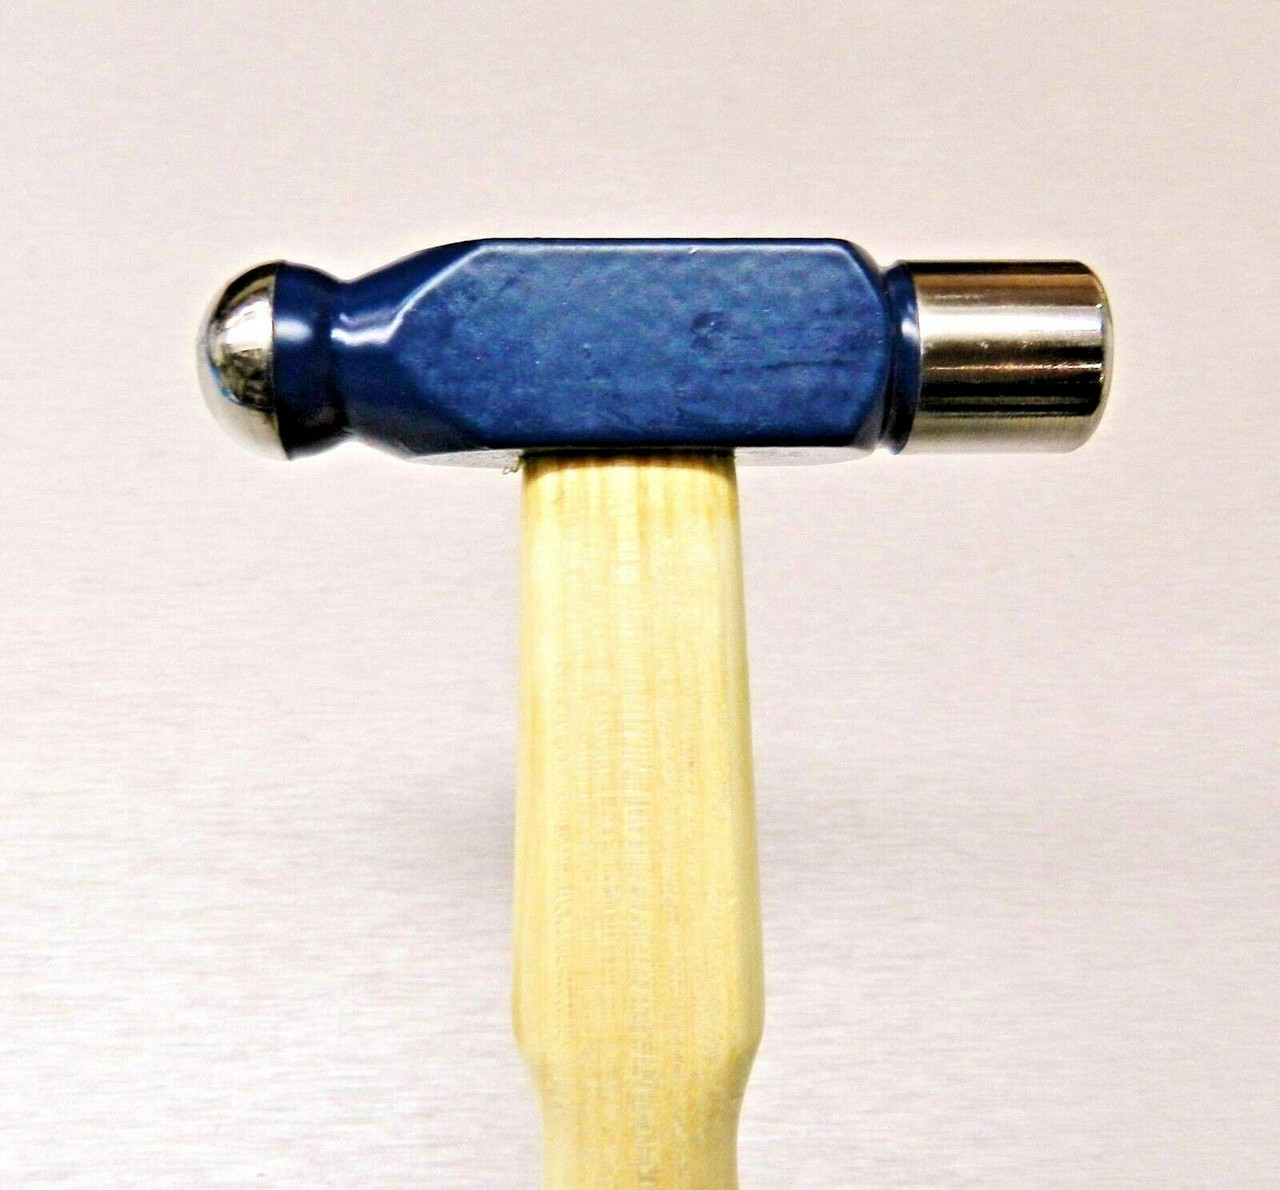 Mini Ball Peen Hammer 3oz Small Ball Pein Hammer Jewelry Making Crafts Hobby